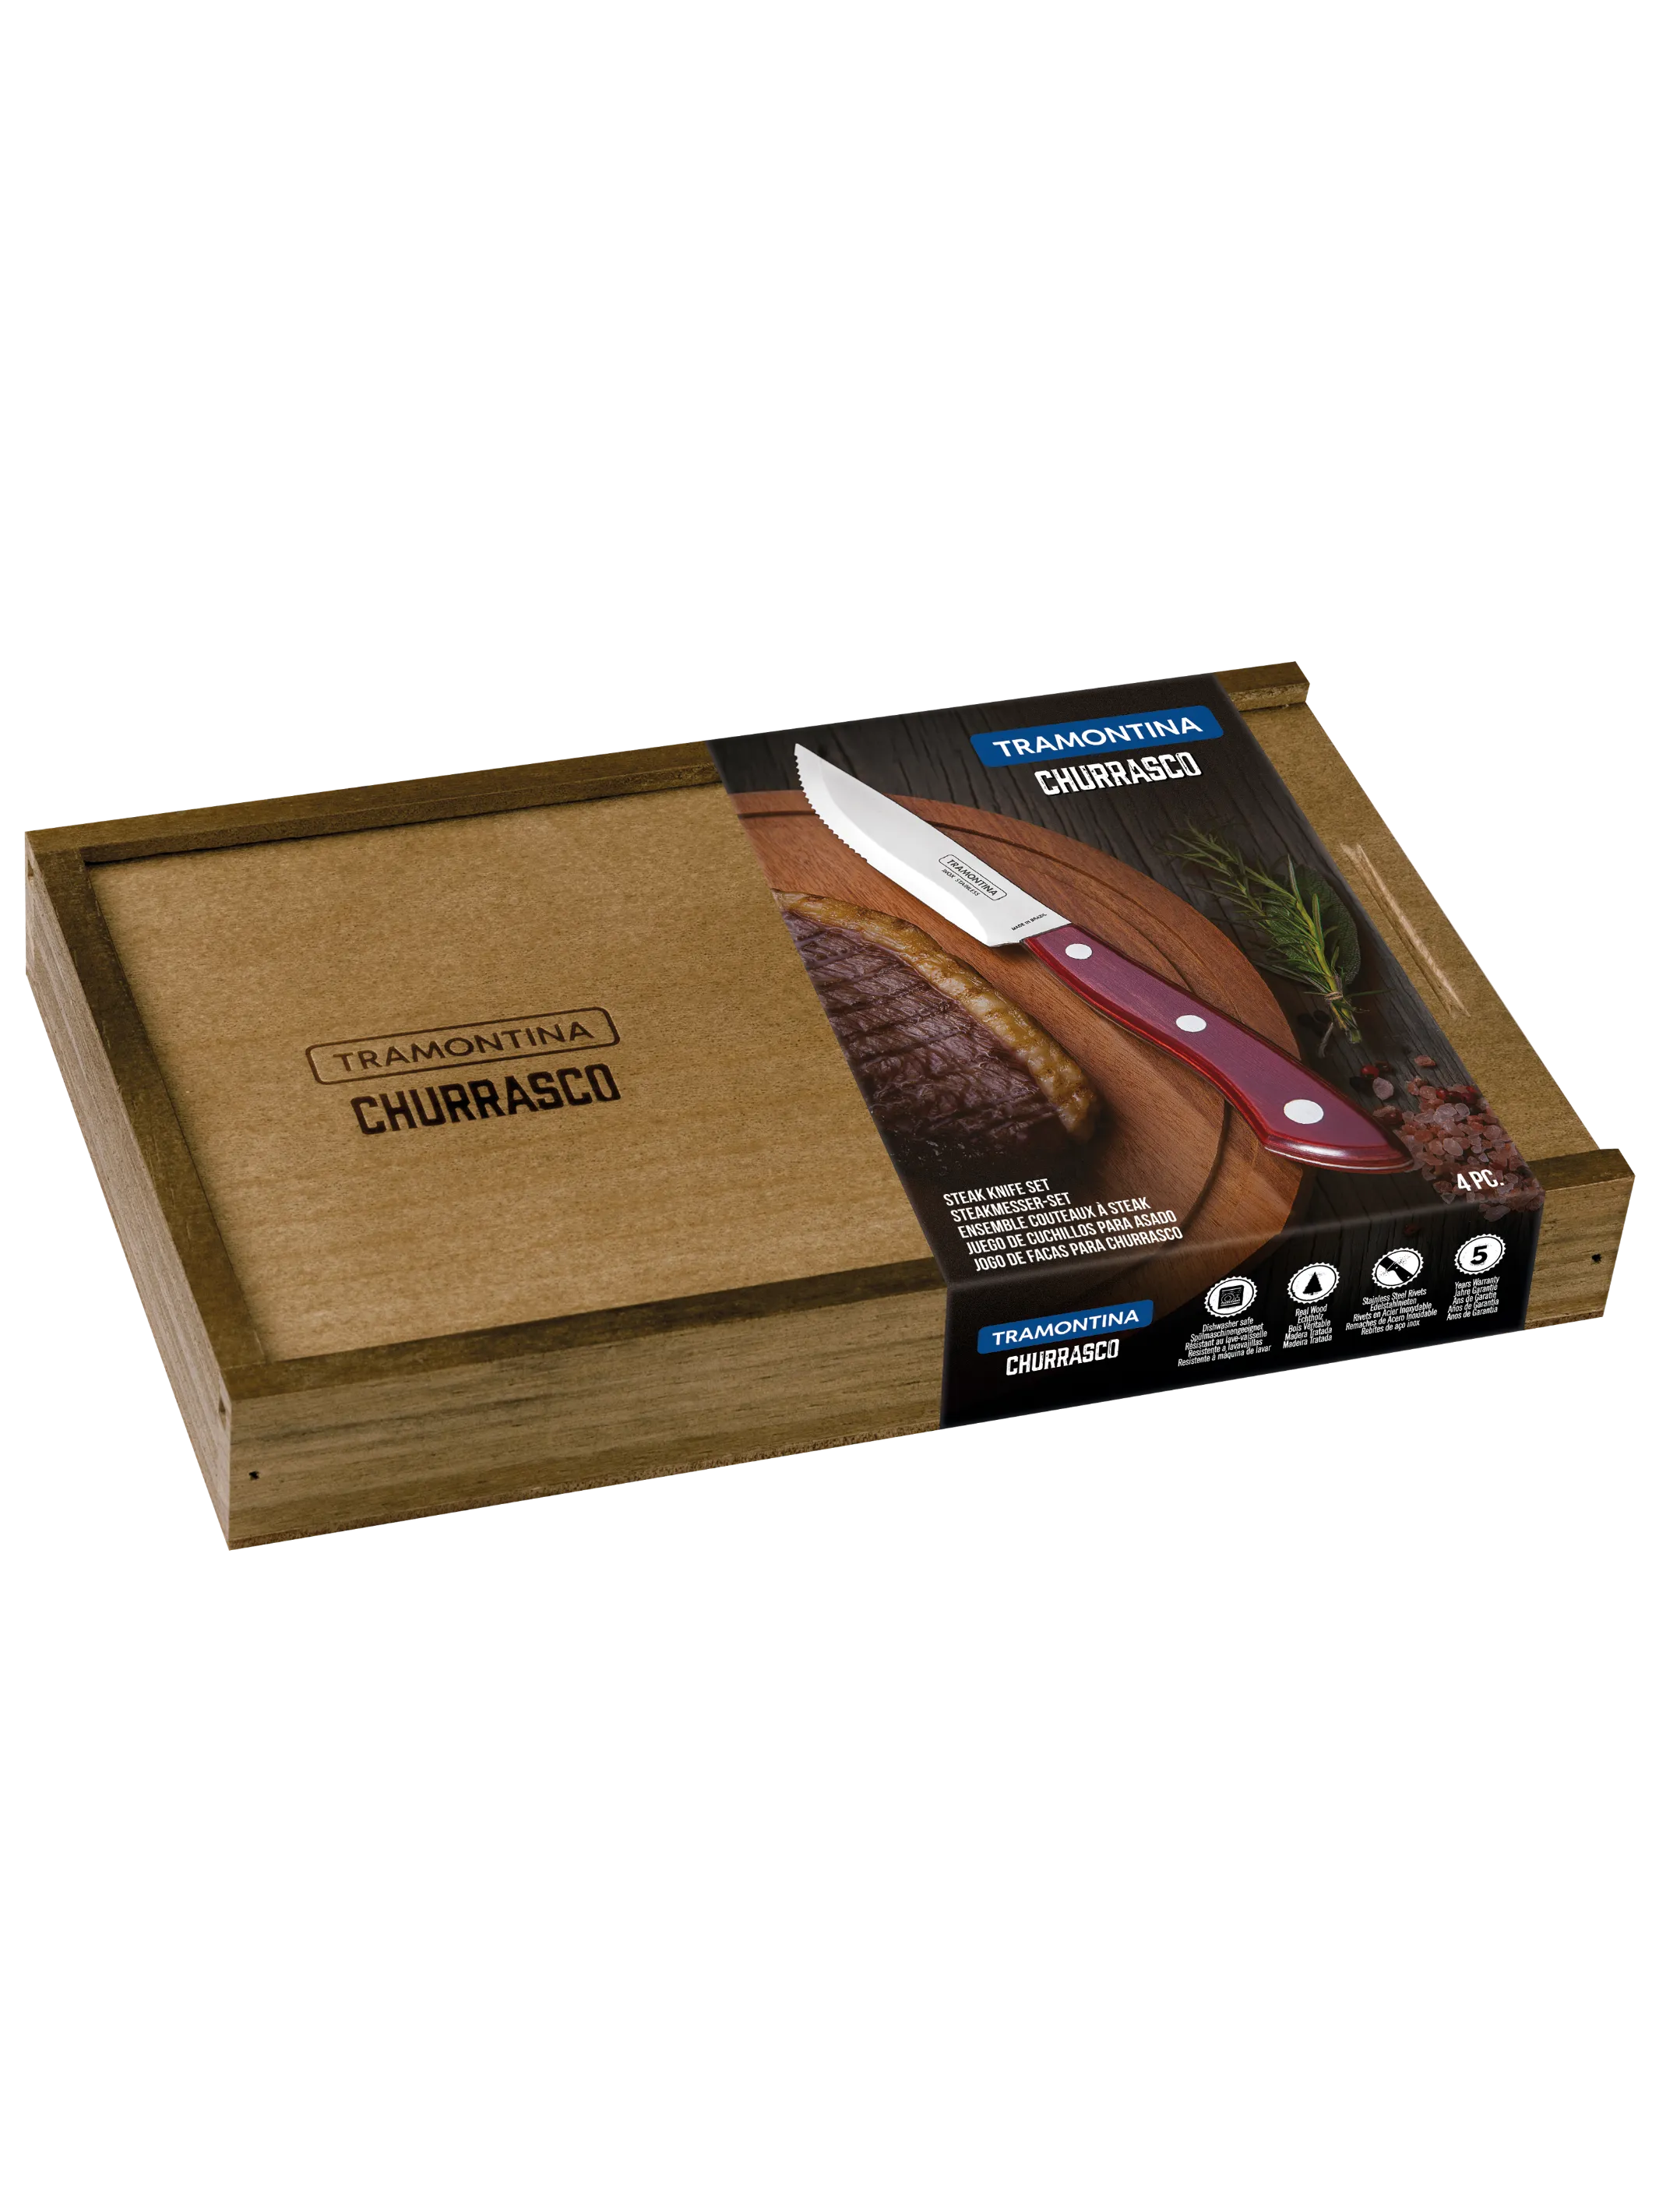 Tramontina 29899513 Churrasco Bueno kés szett fa dobozban 4db